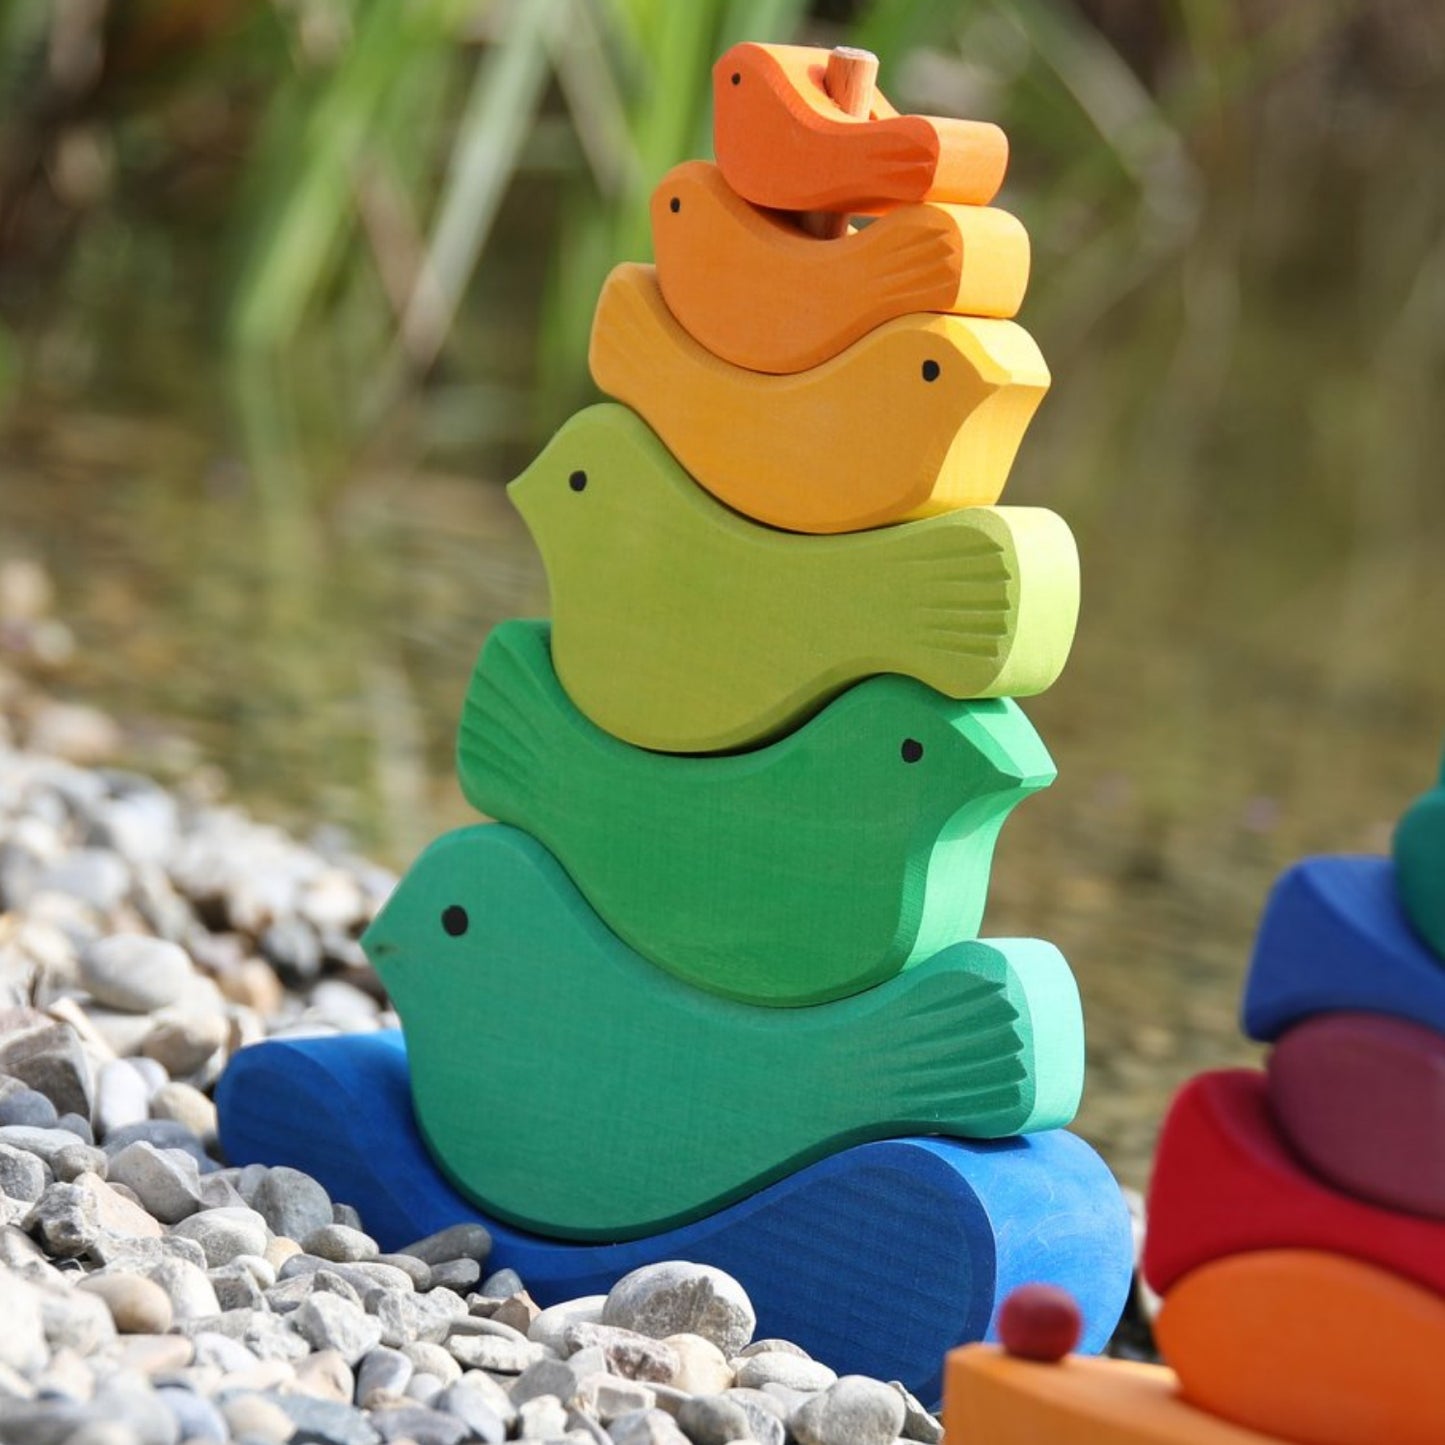 Gluckskafer Wooden Bird Stacker | Imaginative Play Wooden Toys | Waldorf Education and Montessori Education | Lifestyle: Side View –Bird Stacker in Garden | BeoVERDE.ie